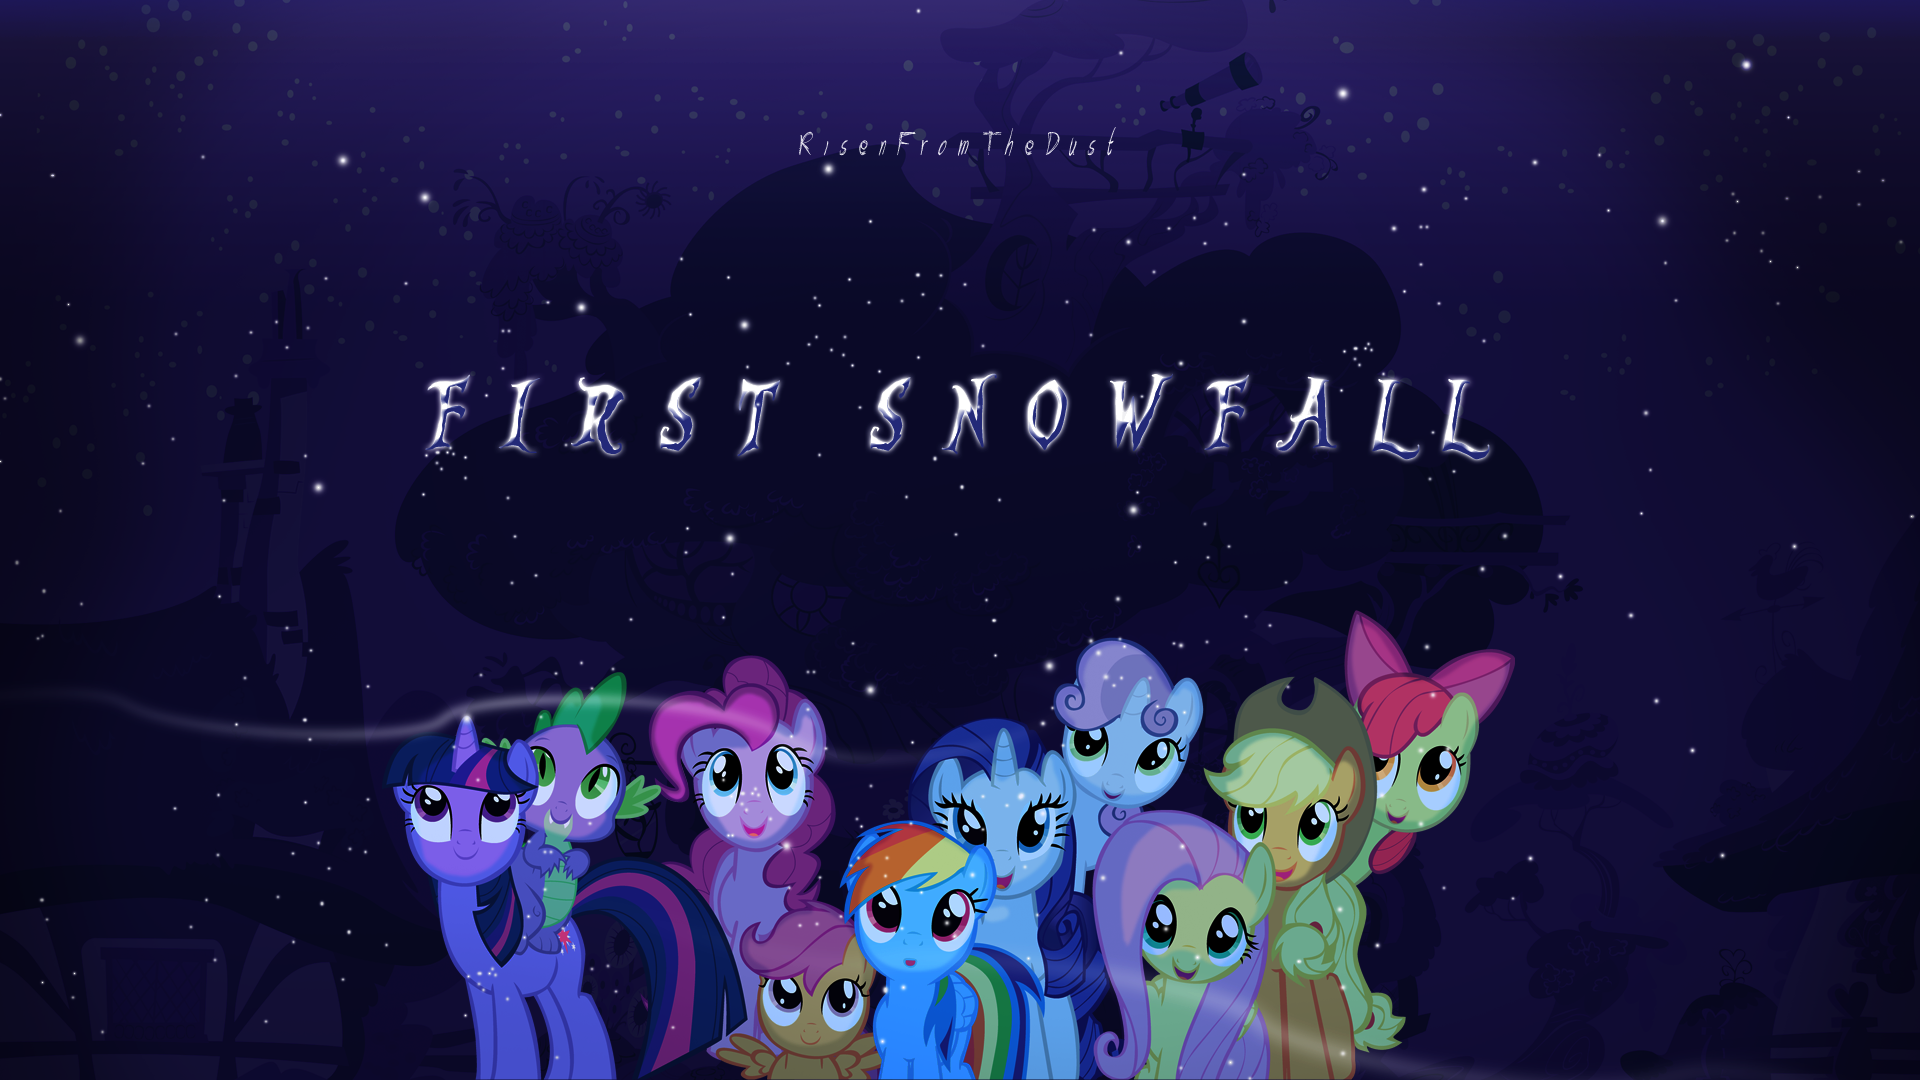 First Snowfall (Cover) by BonesWolbach, Stinkehund and Xtrl